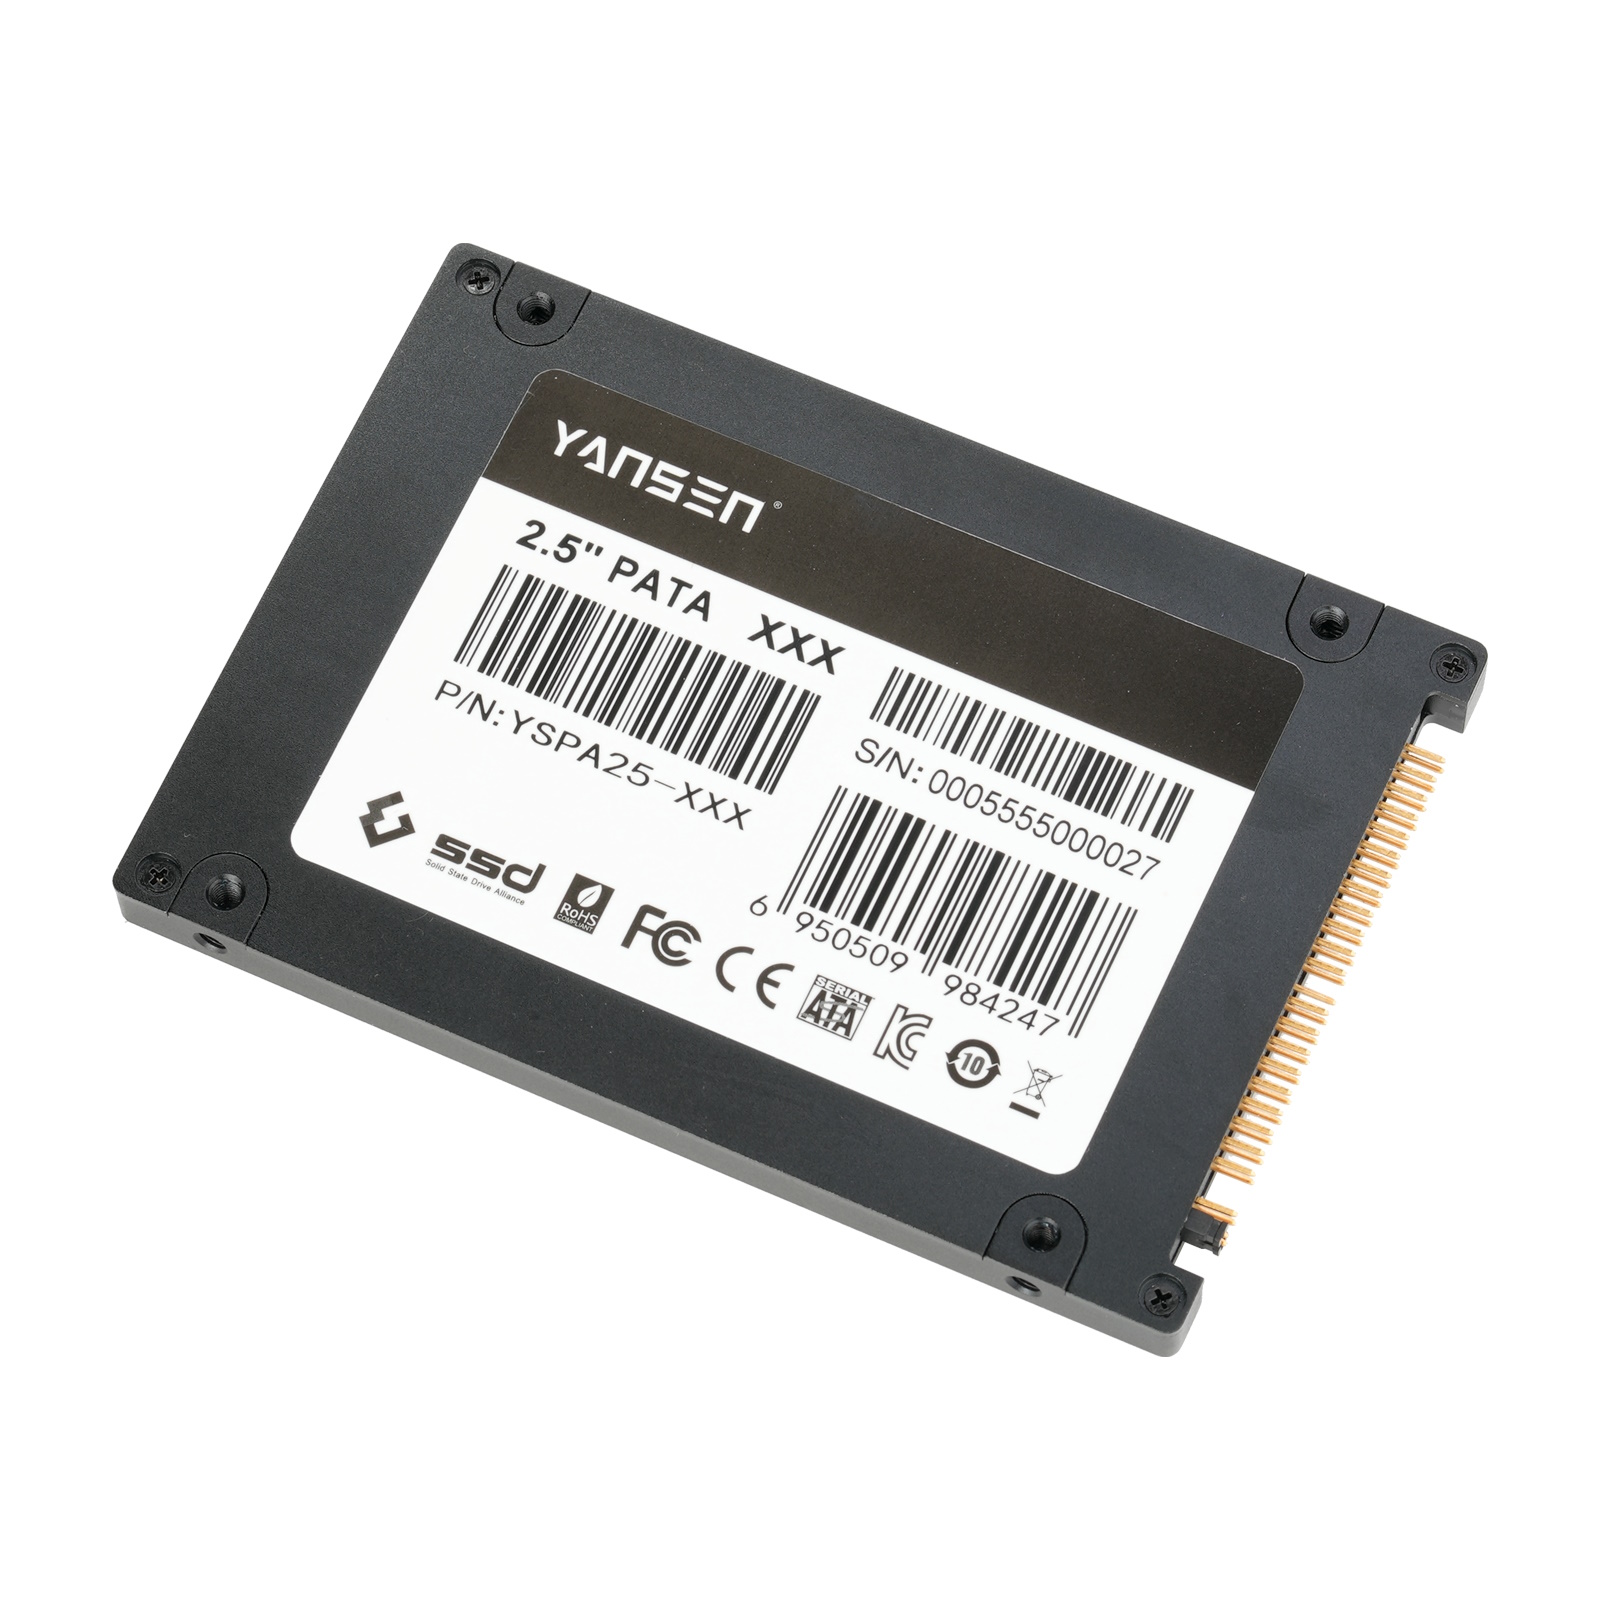 SDE9D Series, 2D NAND Storage, 2.5” PATA SSD, Flash Storage Lineup